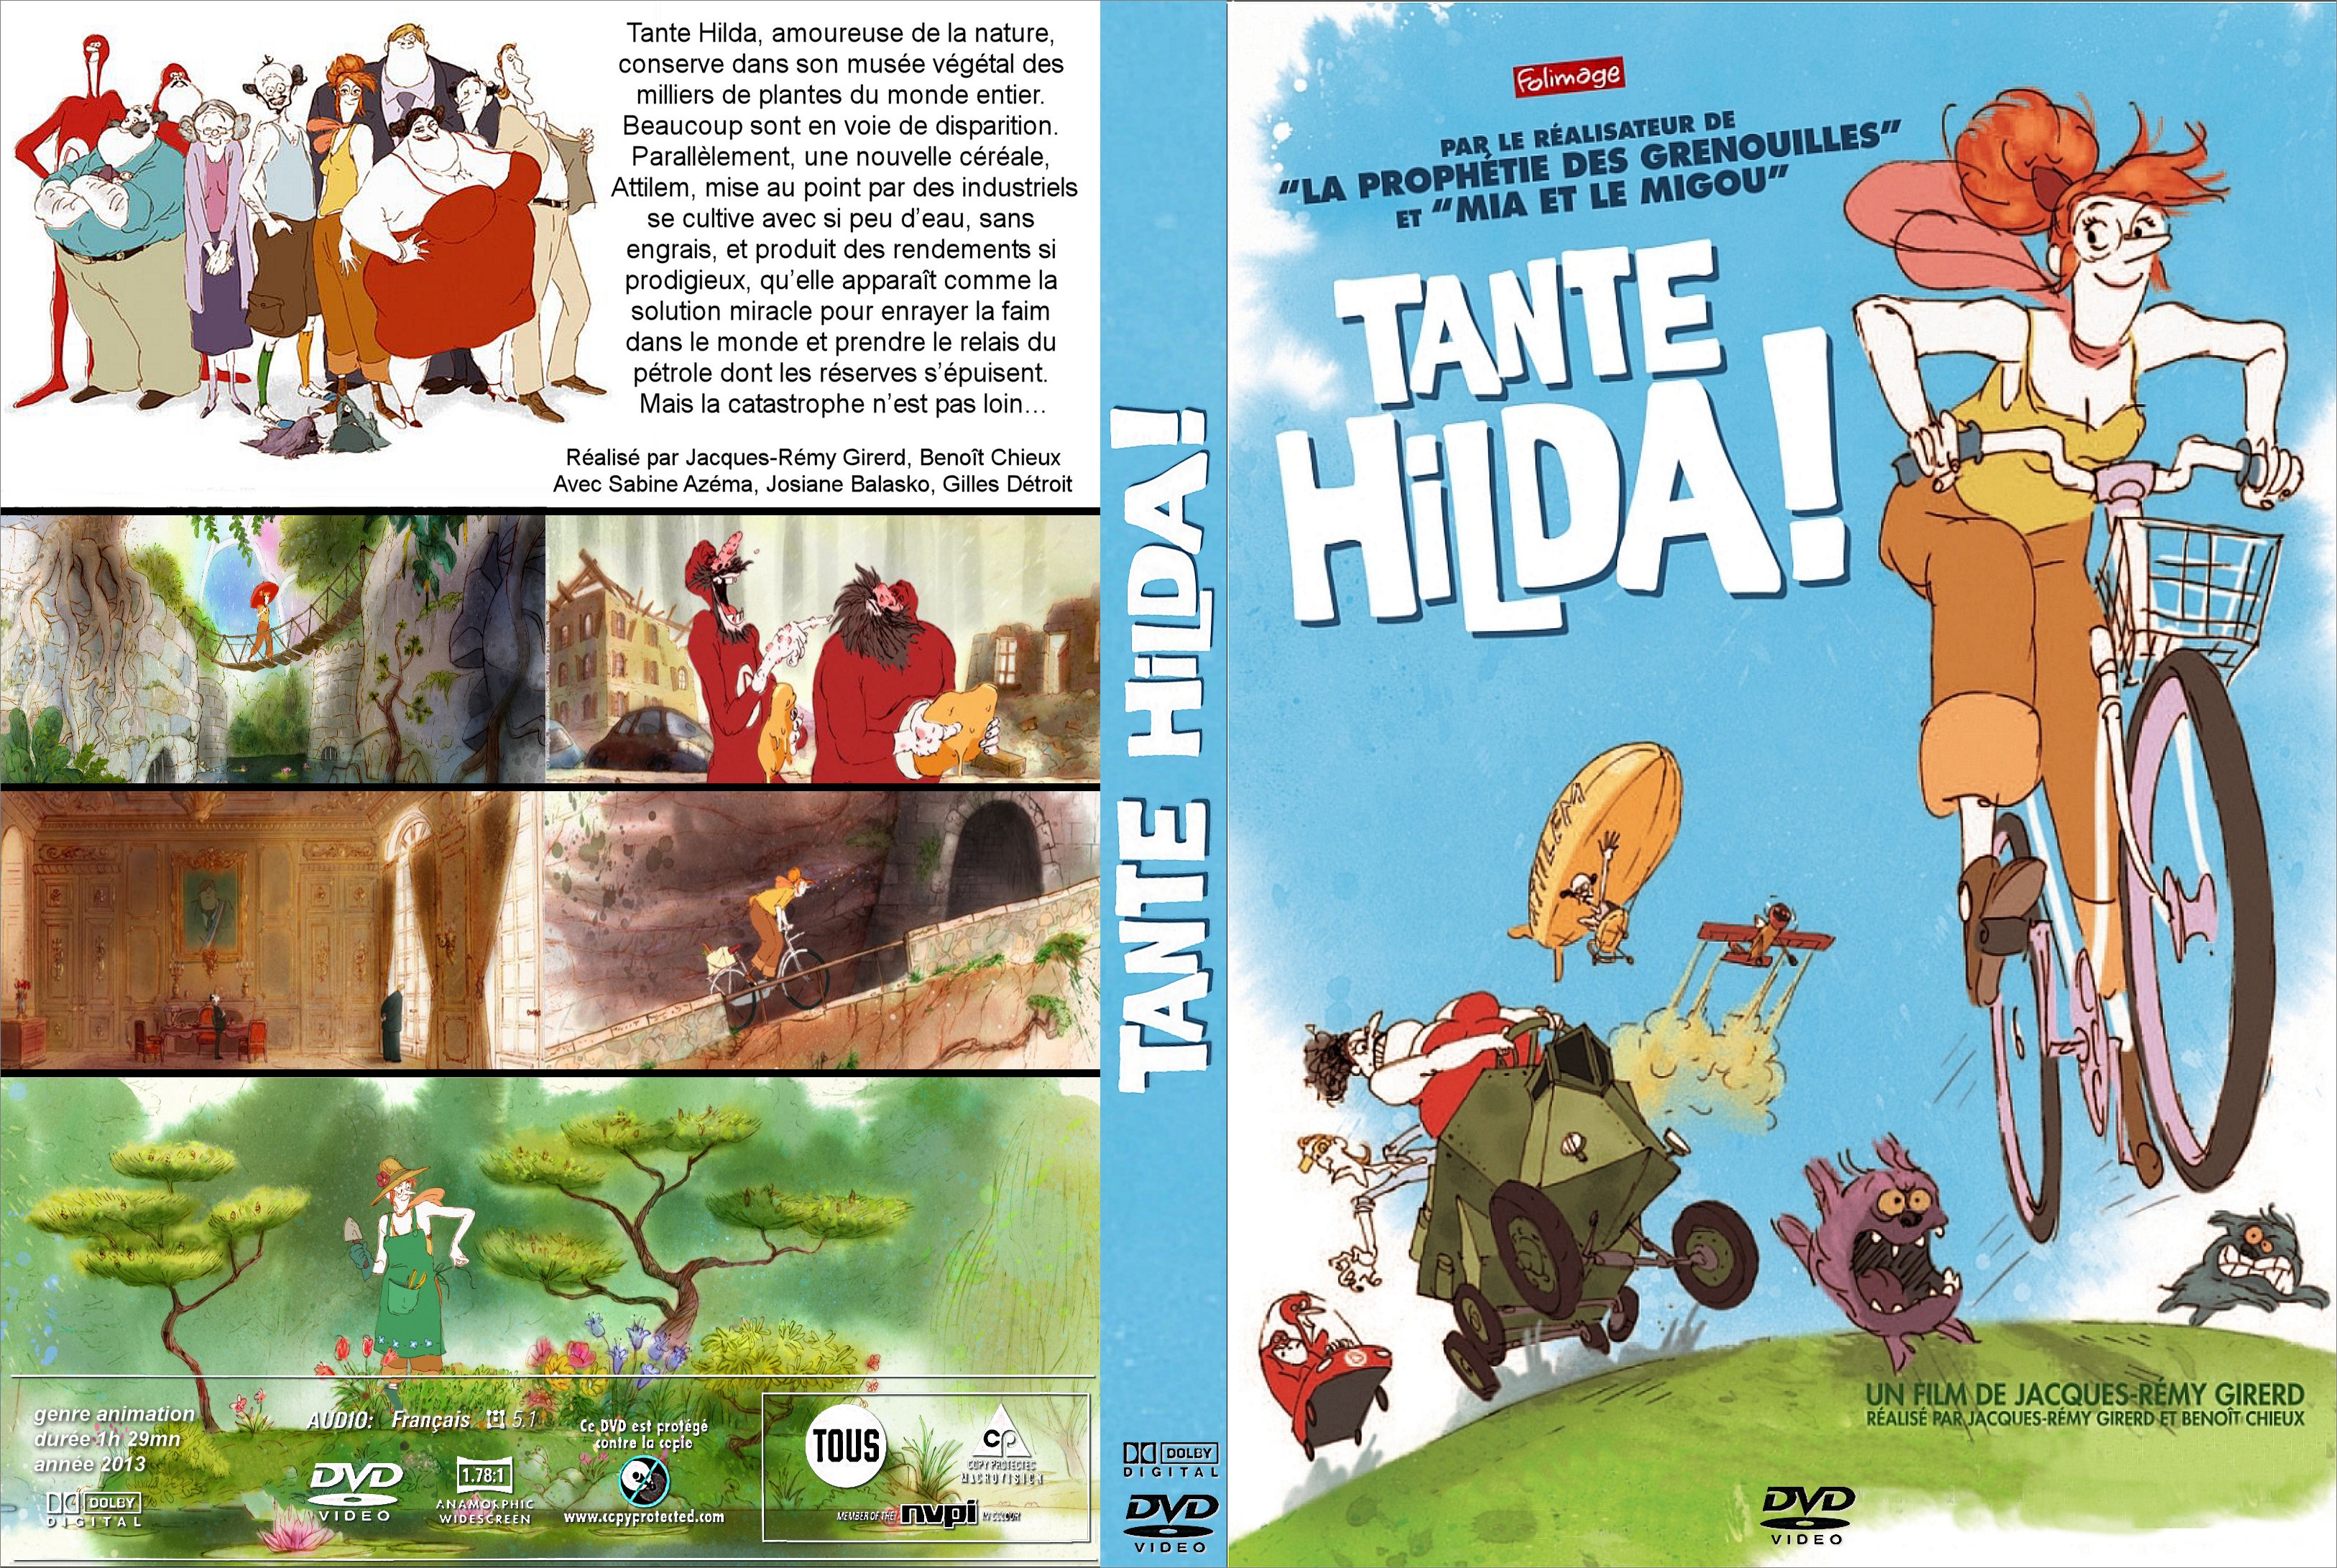 Jaquette DVD Tante Hilda ! custom